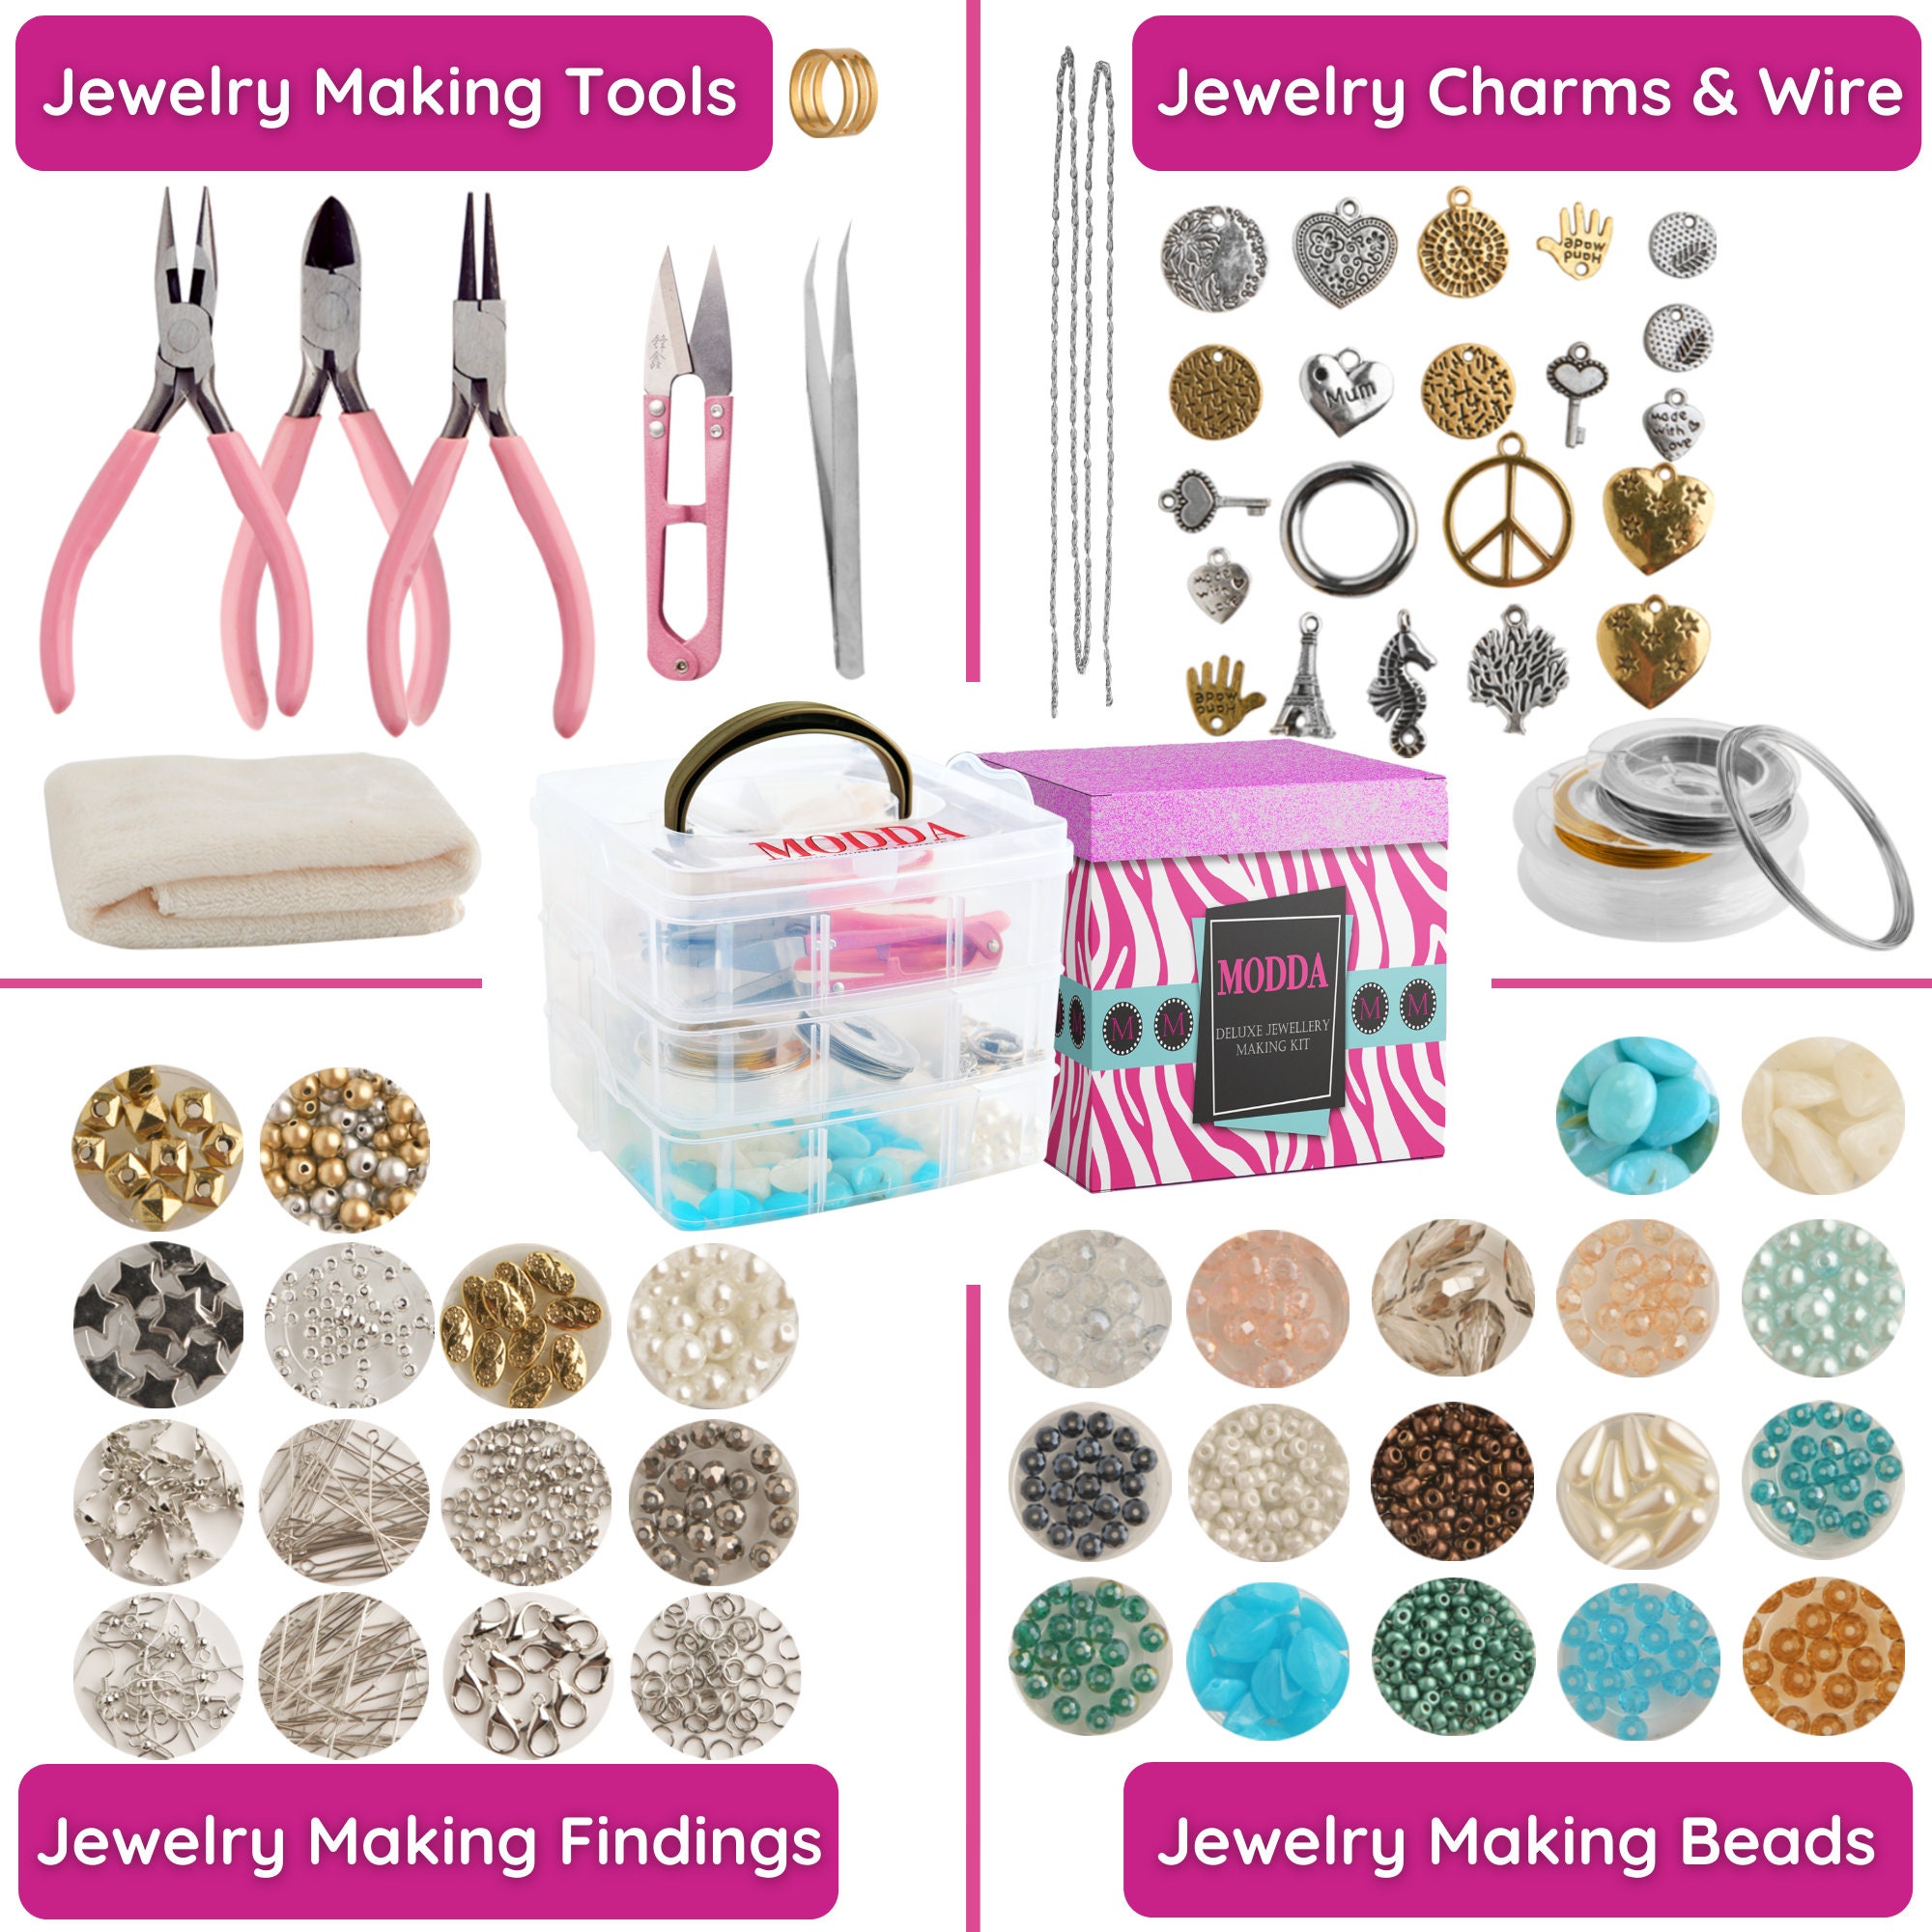 MODDA Jewelry Making Supplies - Jewelry Making Kits Australia